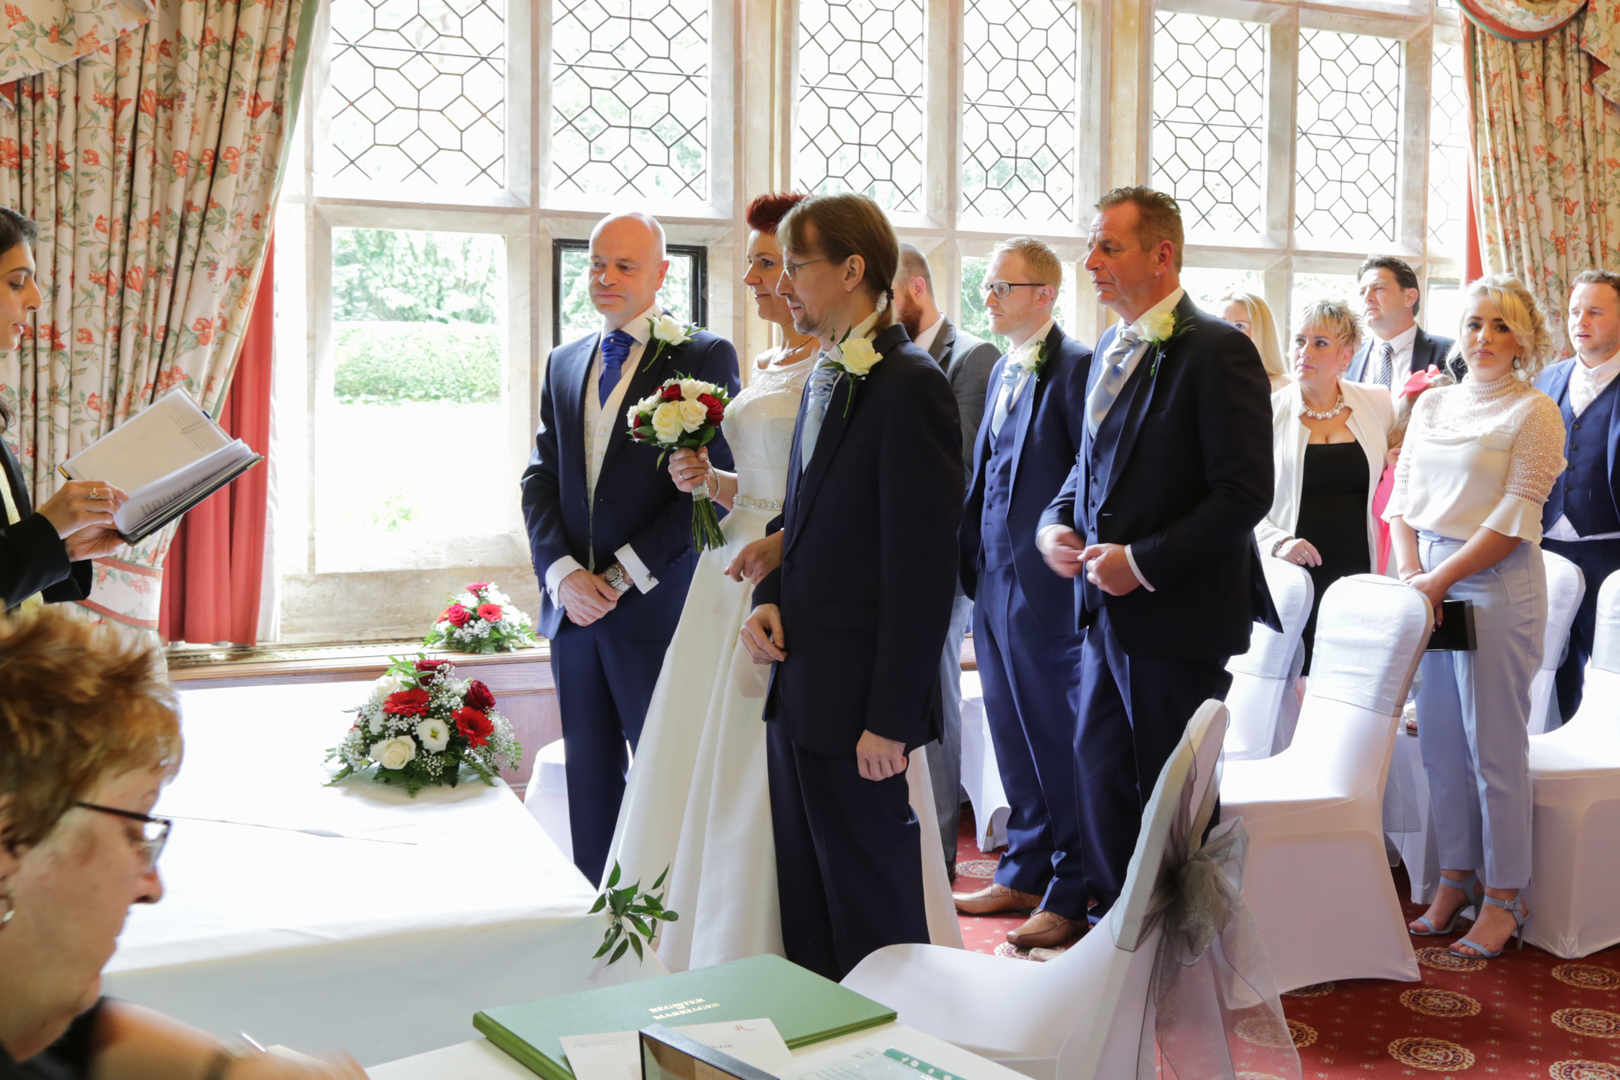 Andy & Marta's wedding ceremony at The Grim's Dyke Hotel Harrow Weald.